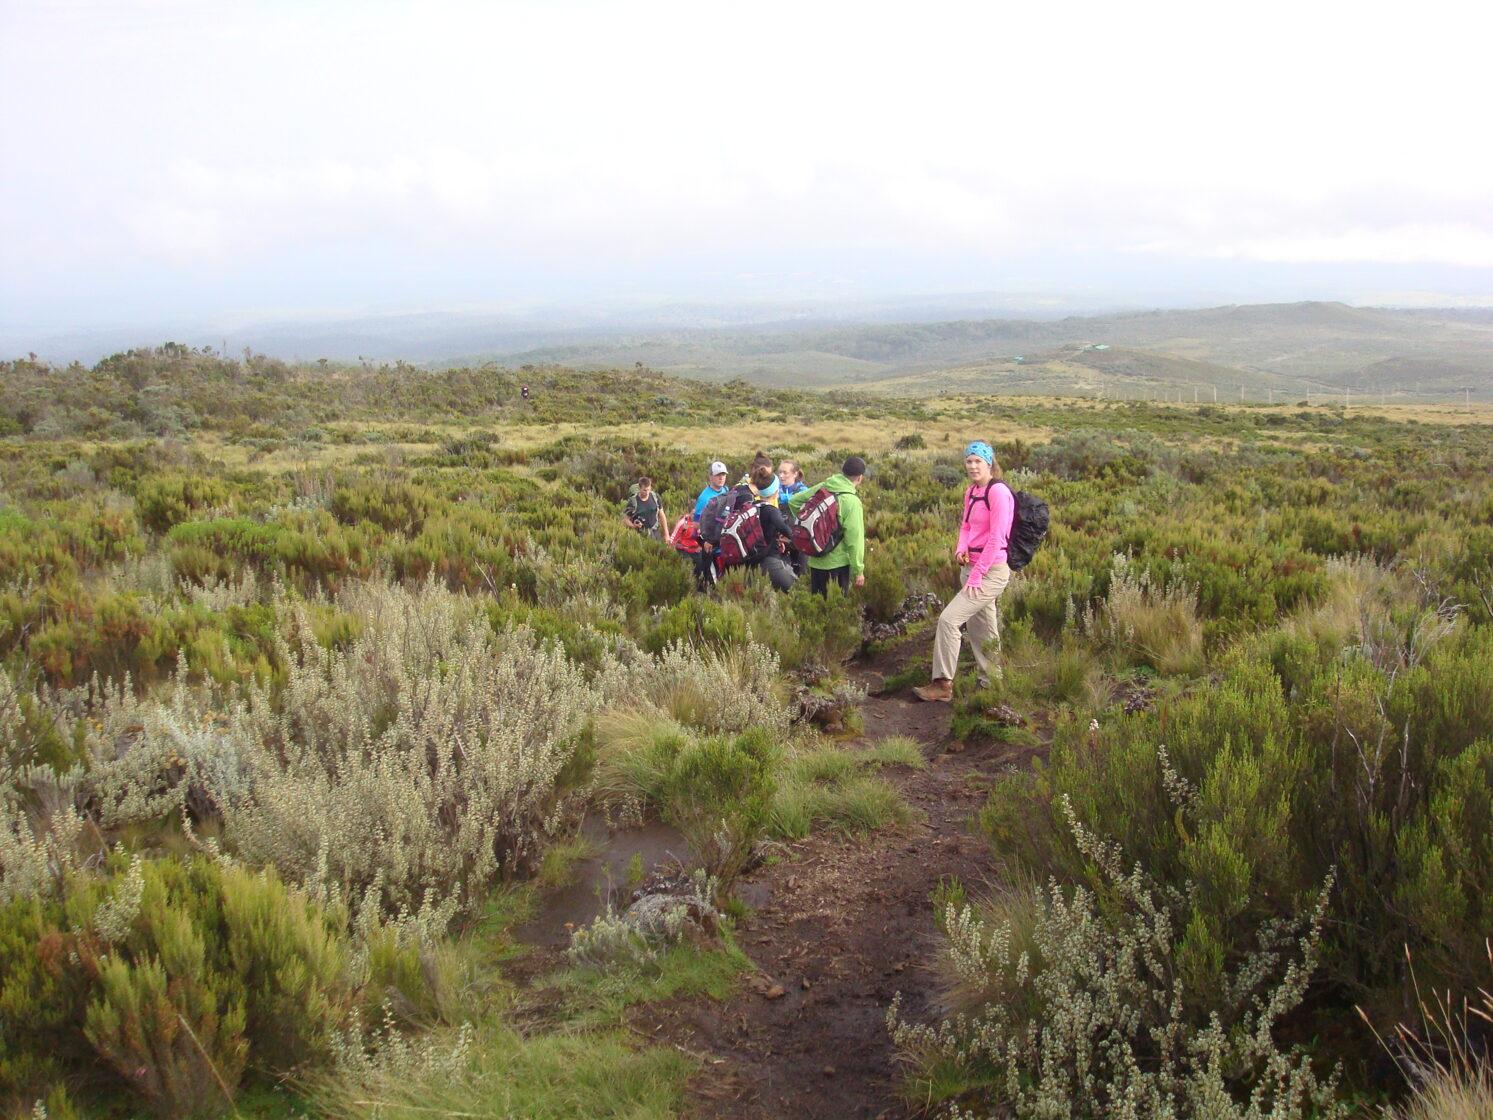 Mount Kenya Trekking Adventure/Trekking Tour Packages/ YHA Kenya Travel/Small Group Adventures Summit Trek Routes.